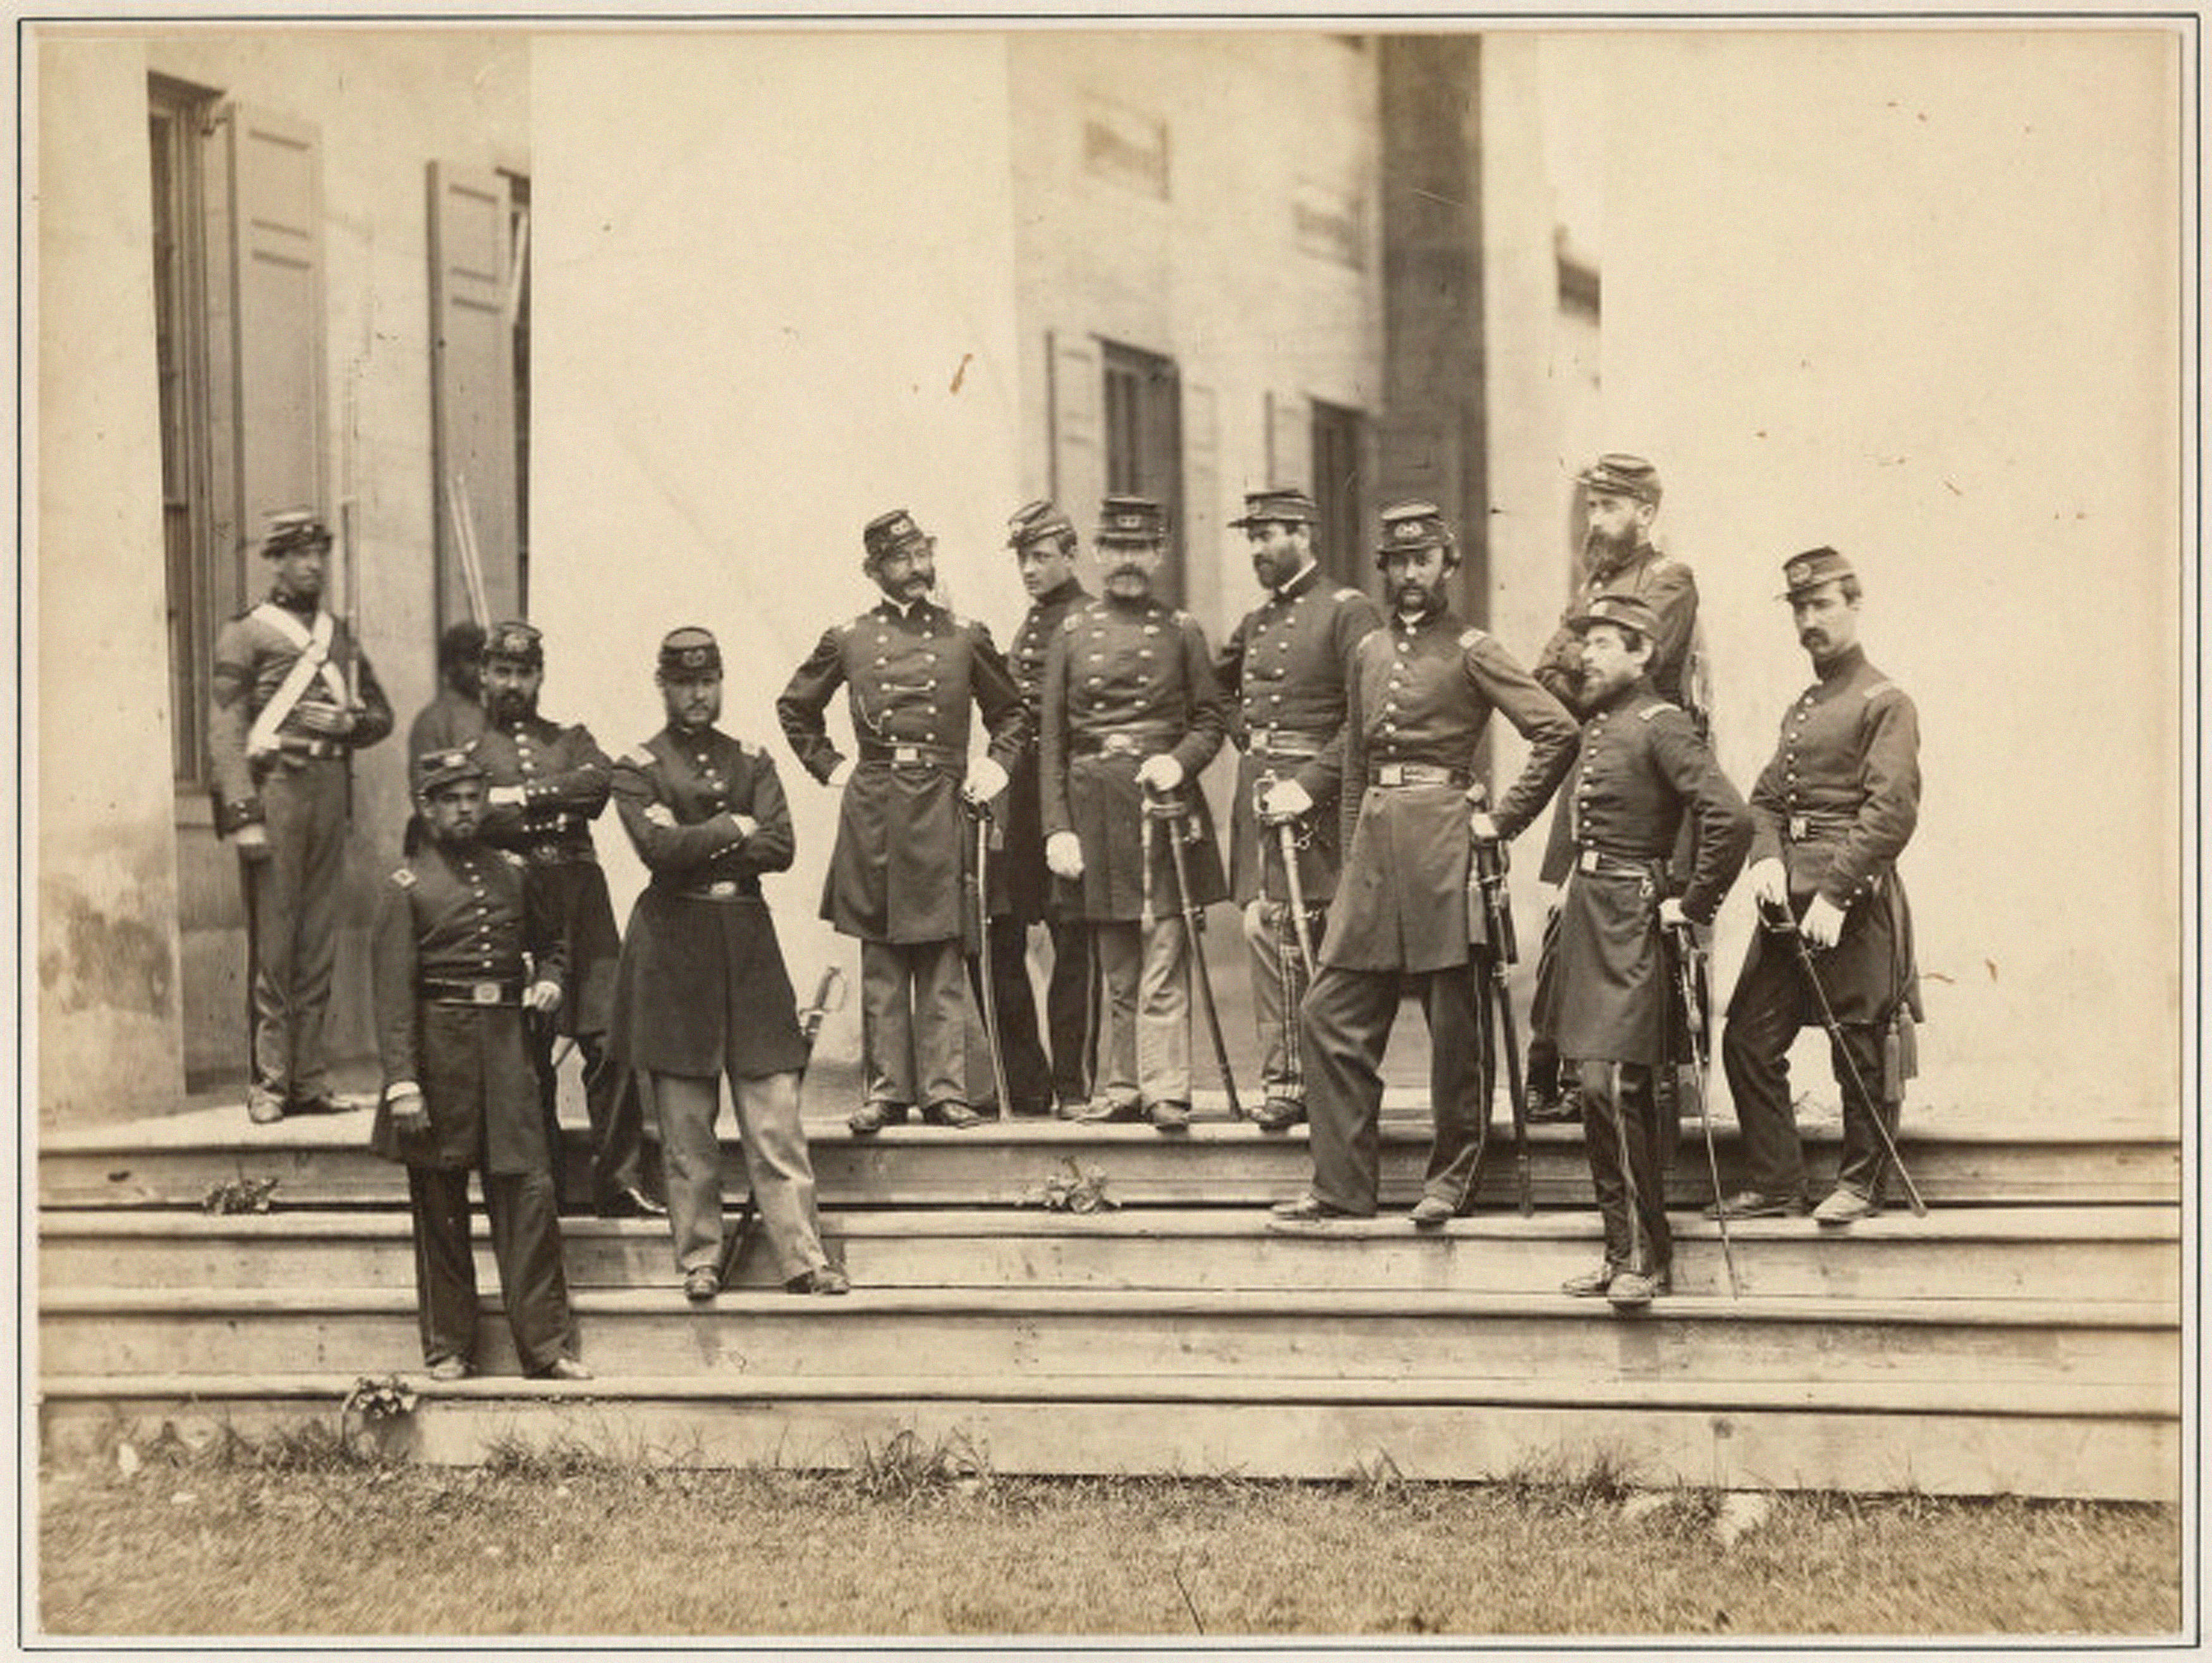 A New York state militia during the Civil War